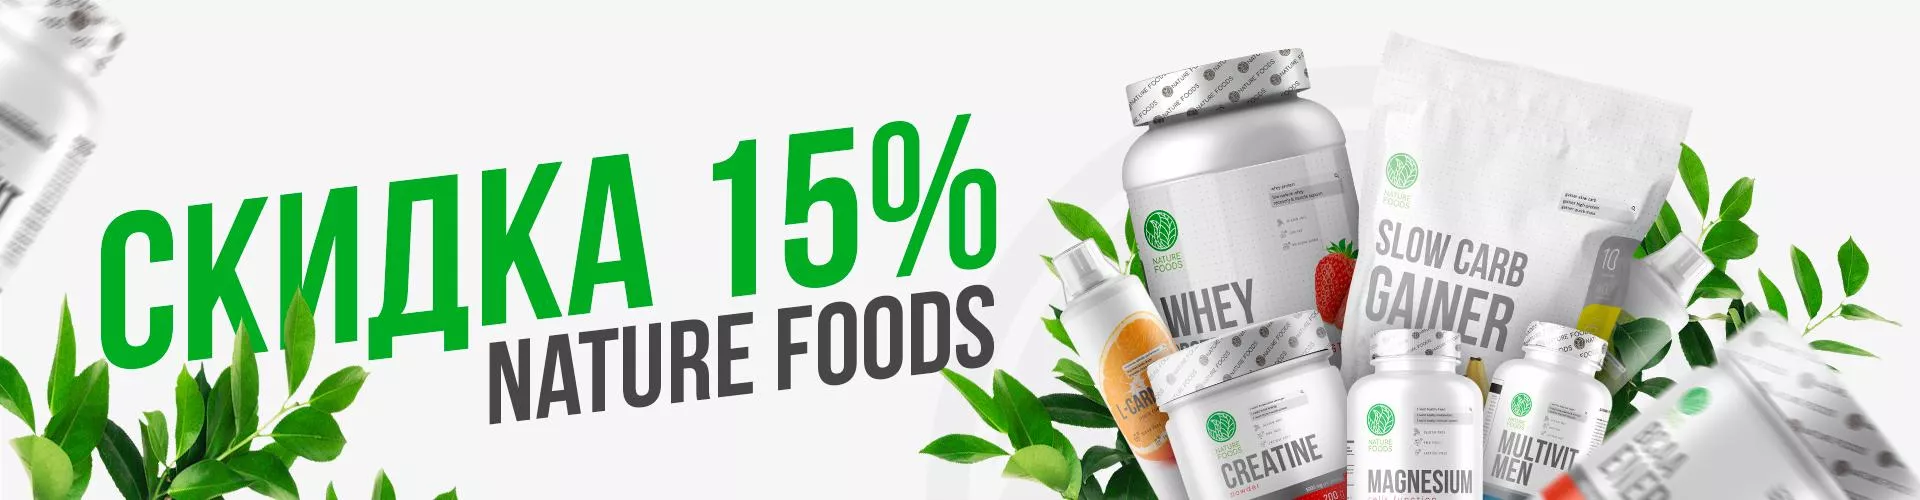 Nature Foods 15%